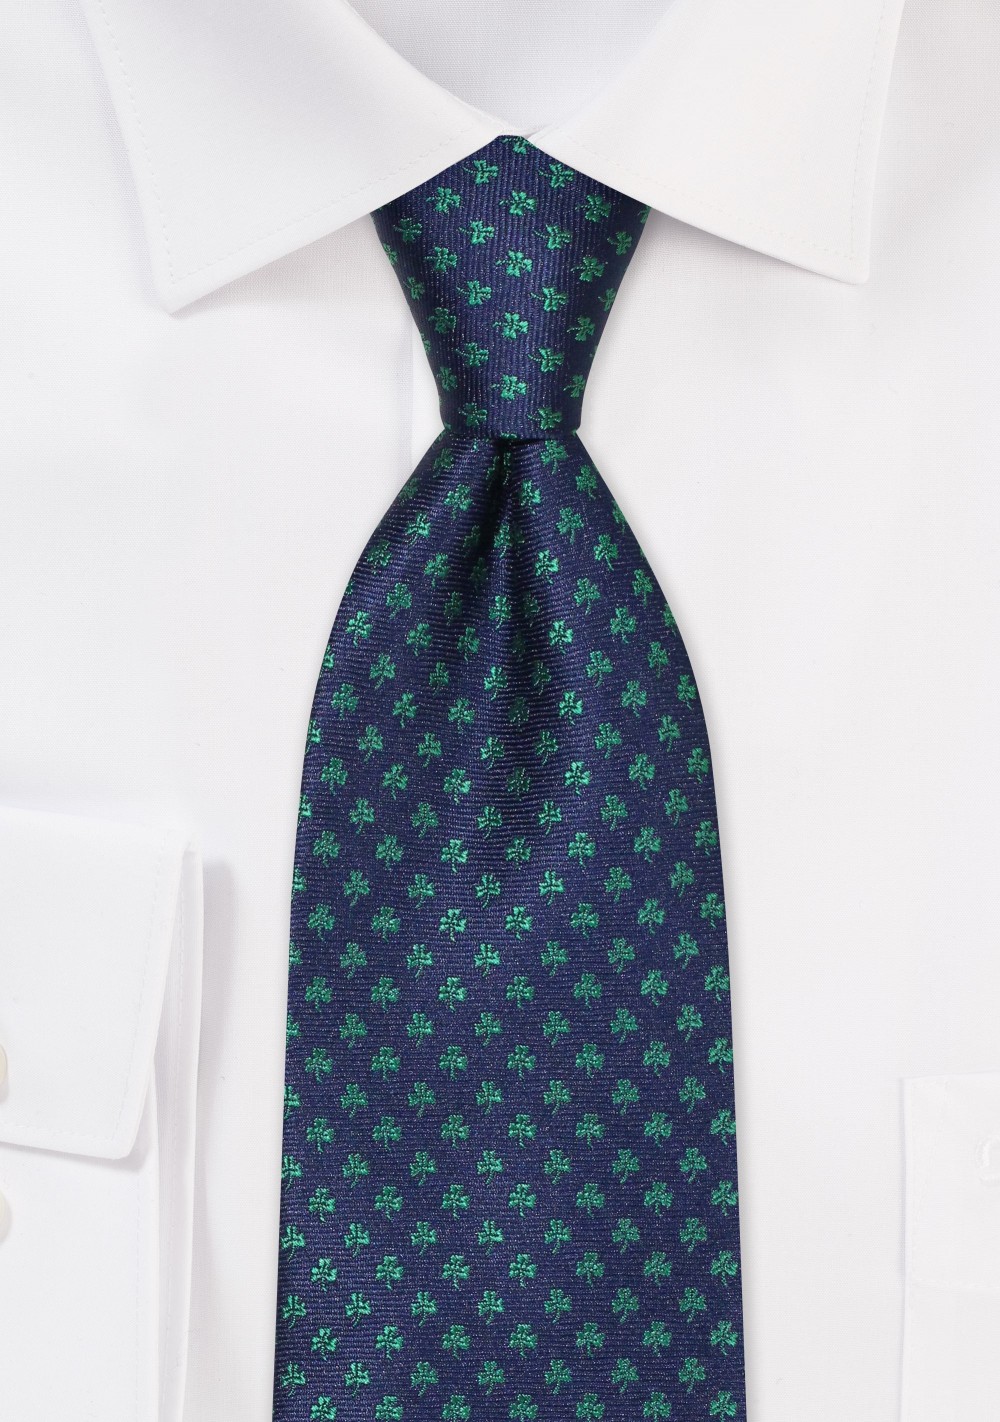 Blue Tie with Shamrock Pattern